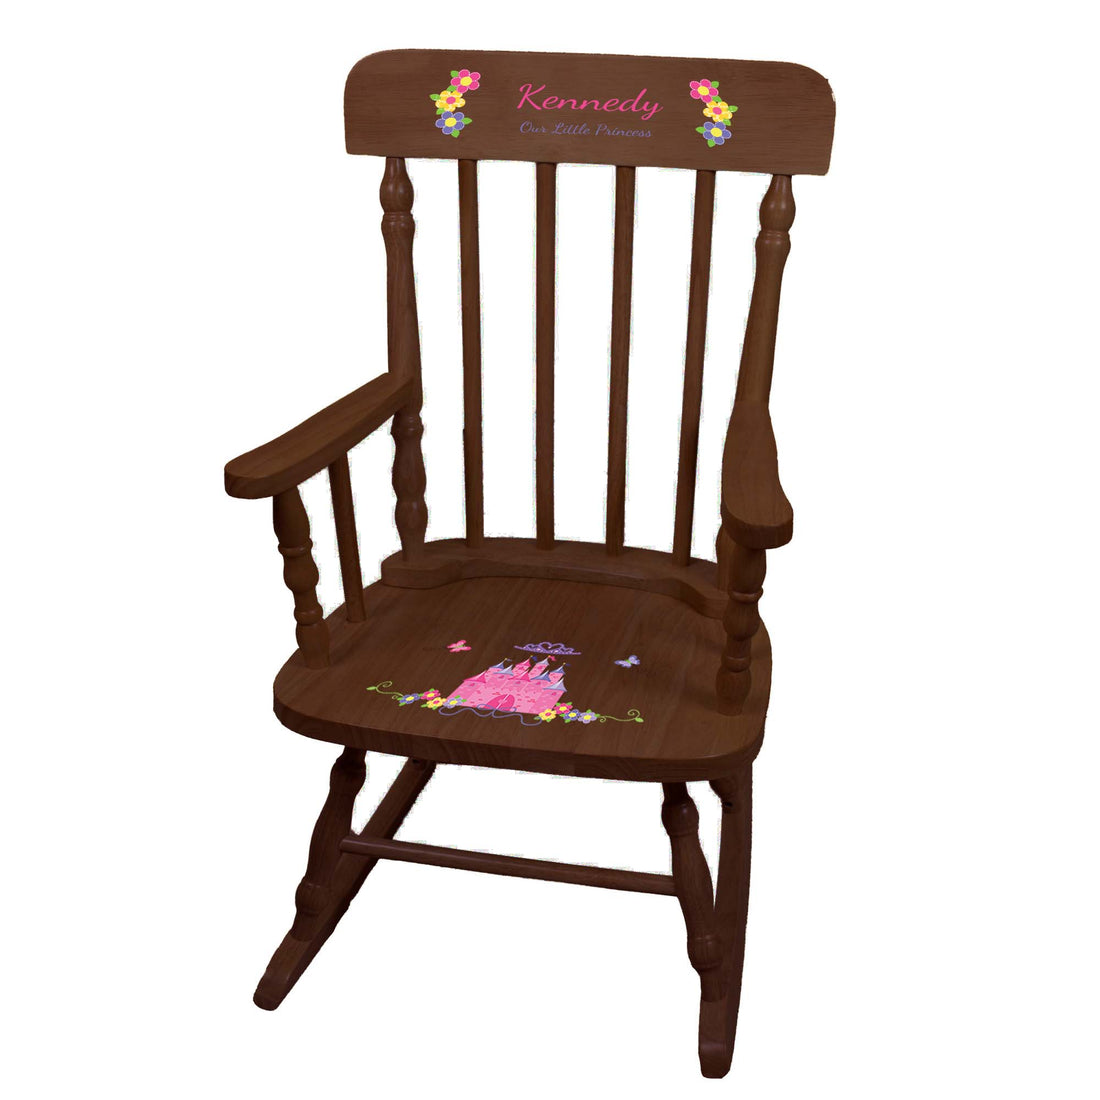 Princess Castle Spindle Rocking Chair - Espresso